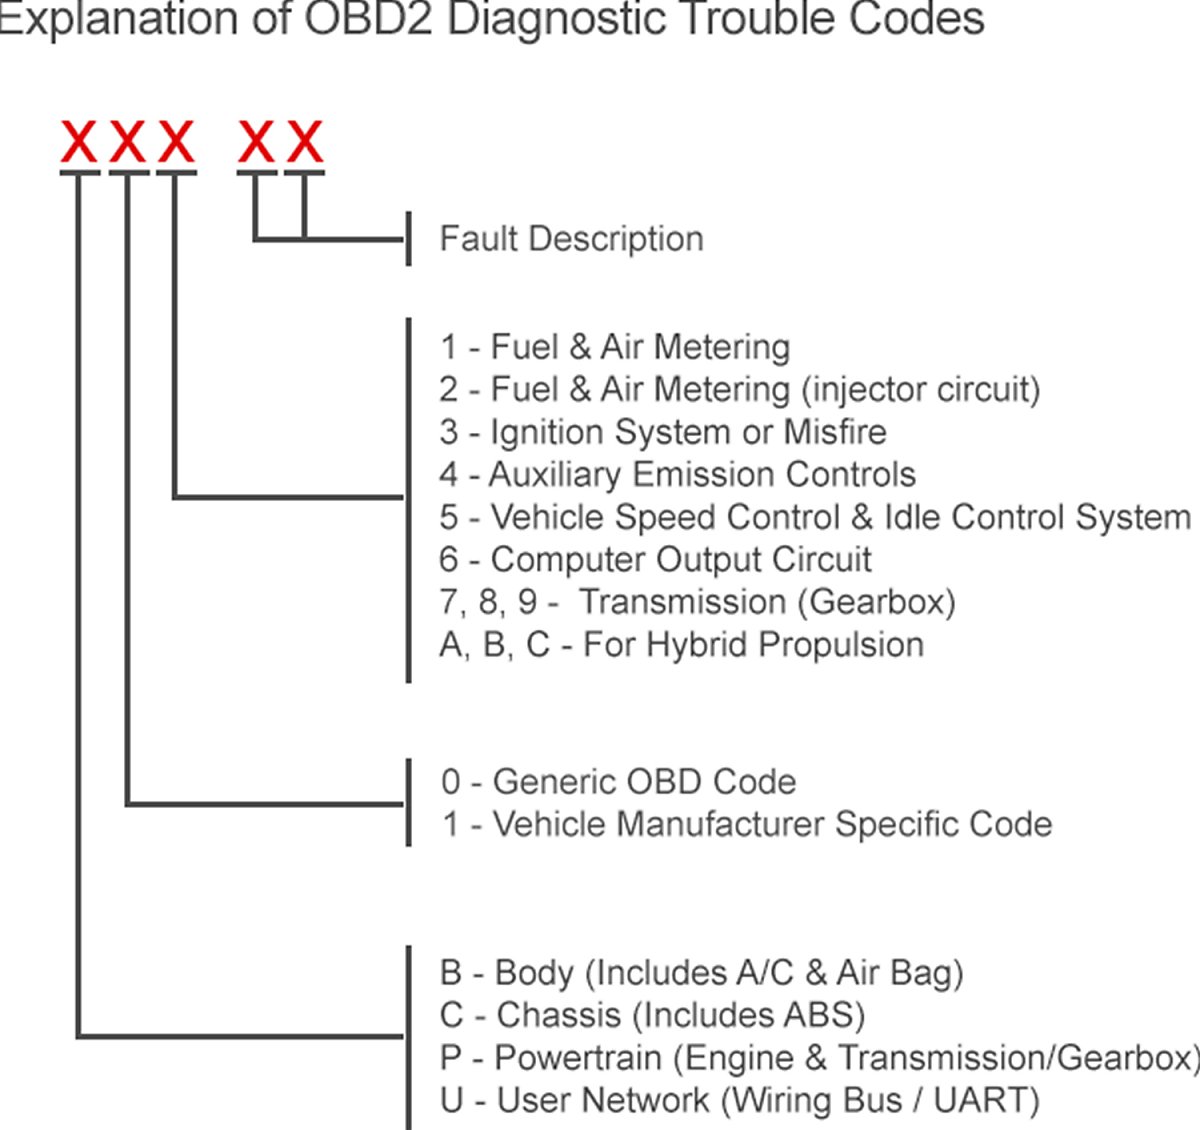 obd2-codes-explanation.jpg?type=w1200